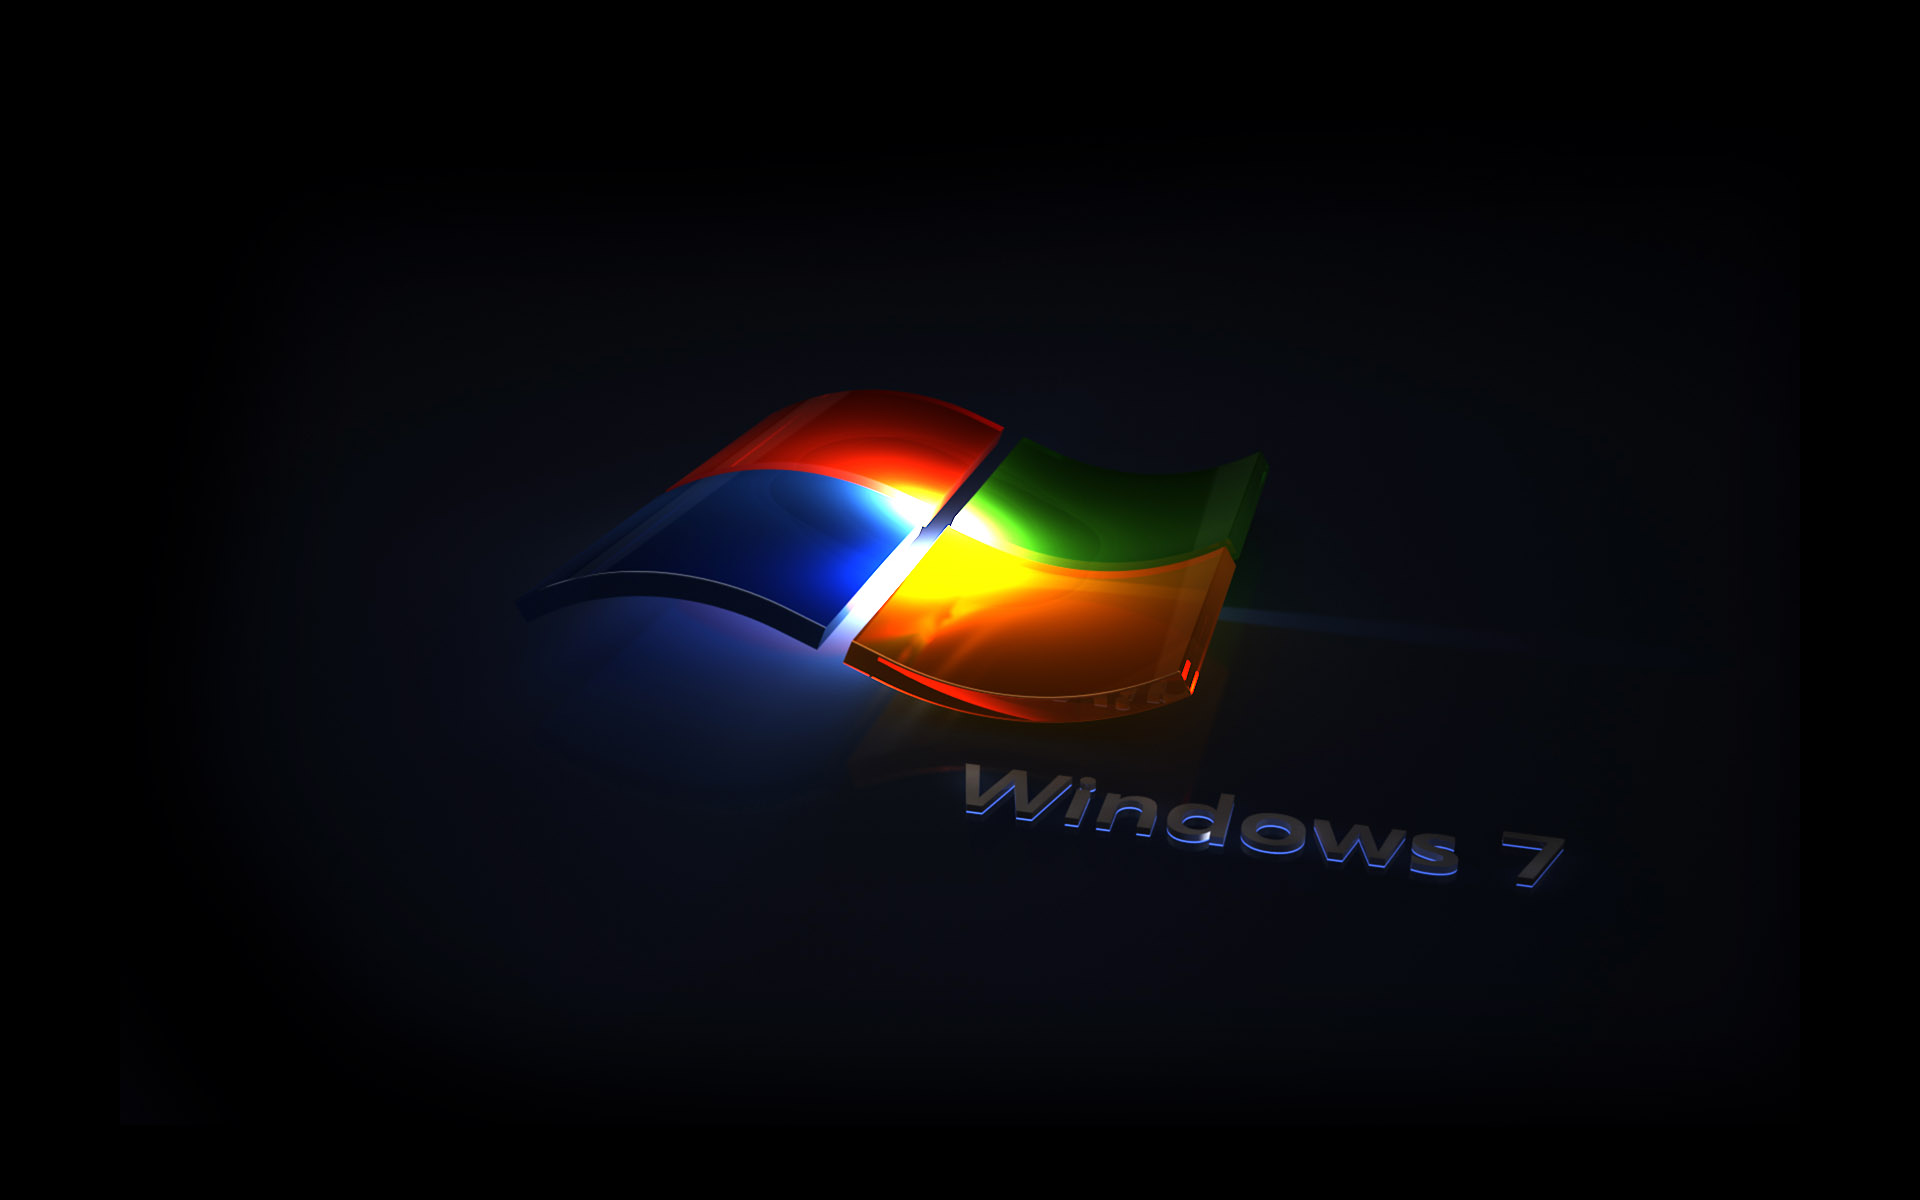 windows 7, windows, microsoft, technology